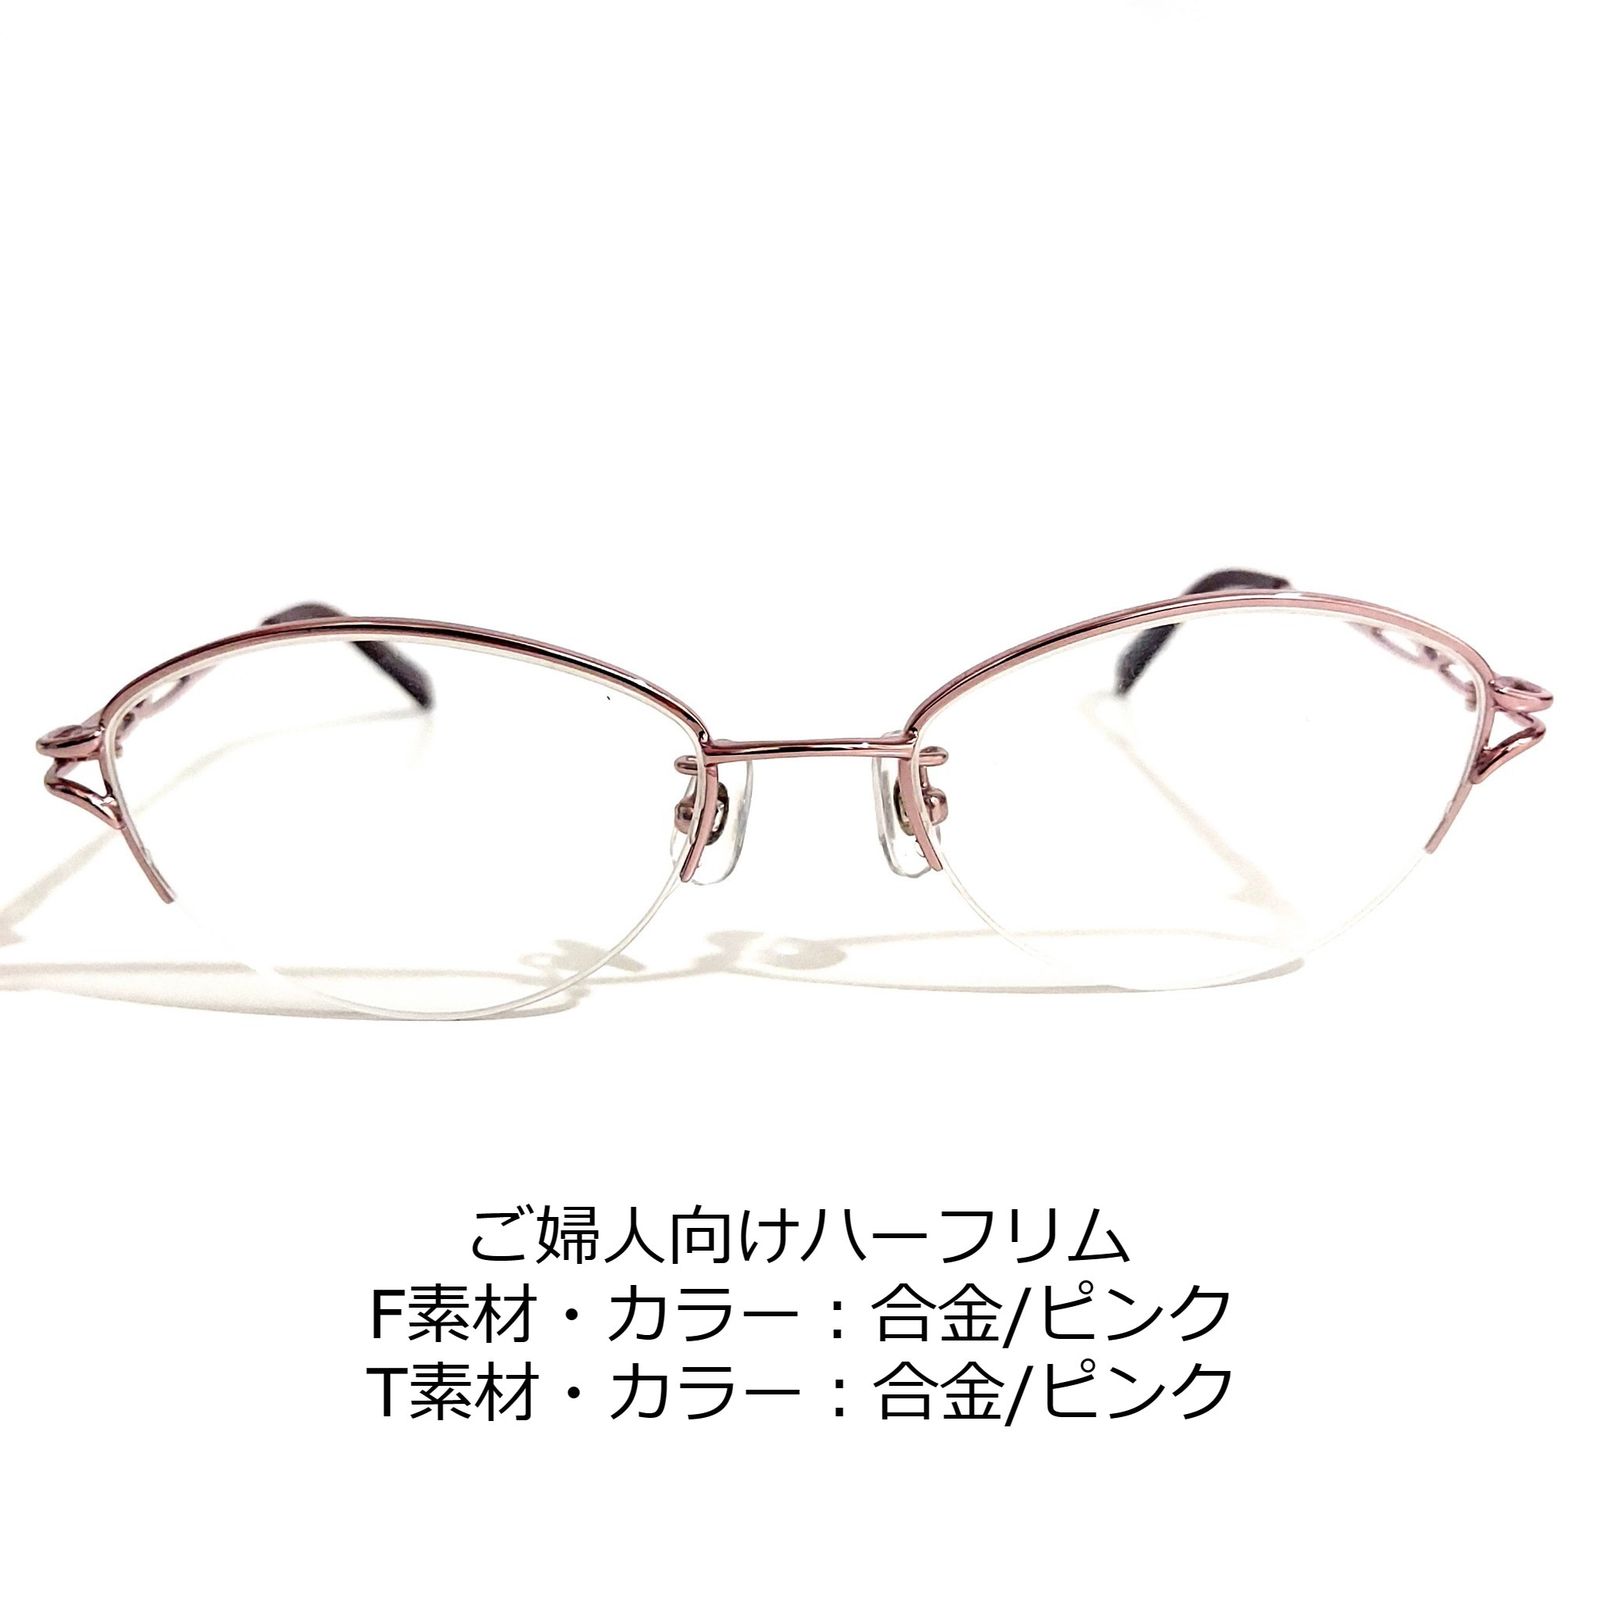 butszo.jp - No.2489メガネ NEOSTYLE(ネオスタイル) 価格比較